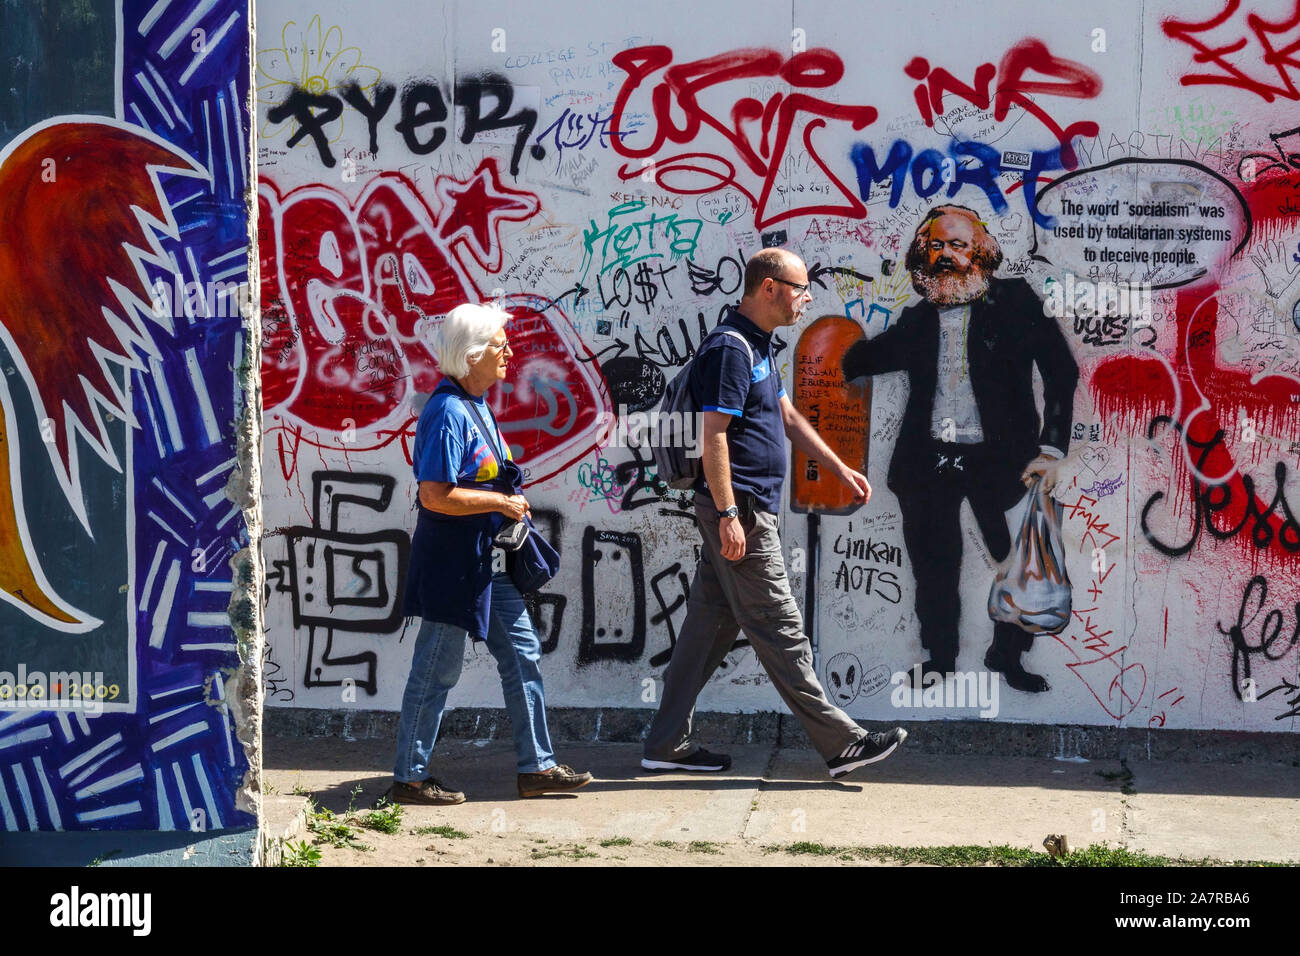 Berlin wall graffiti tourists passing around Karl Marx Berlin East Side Gallery Germany Friedrichshain city street art Stock Photo